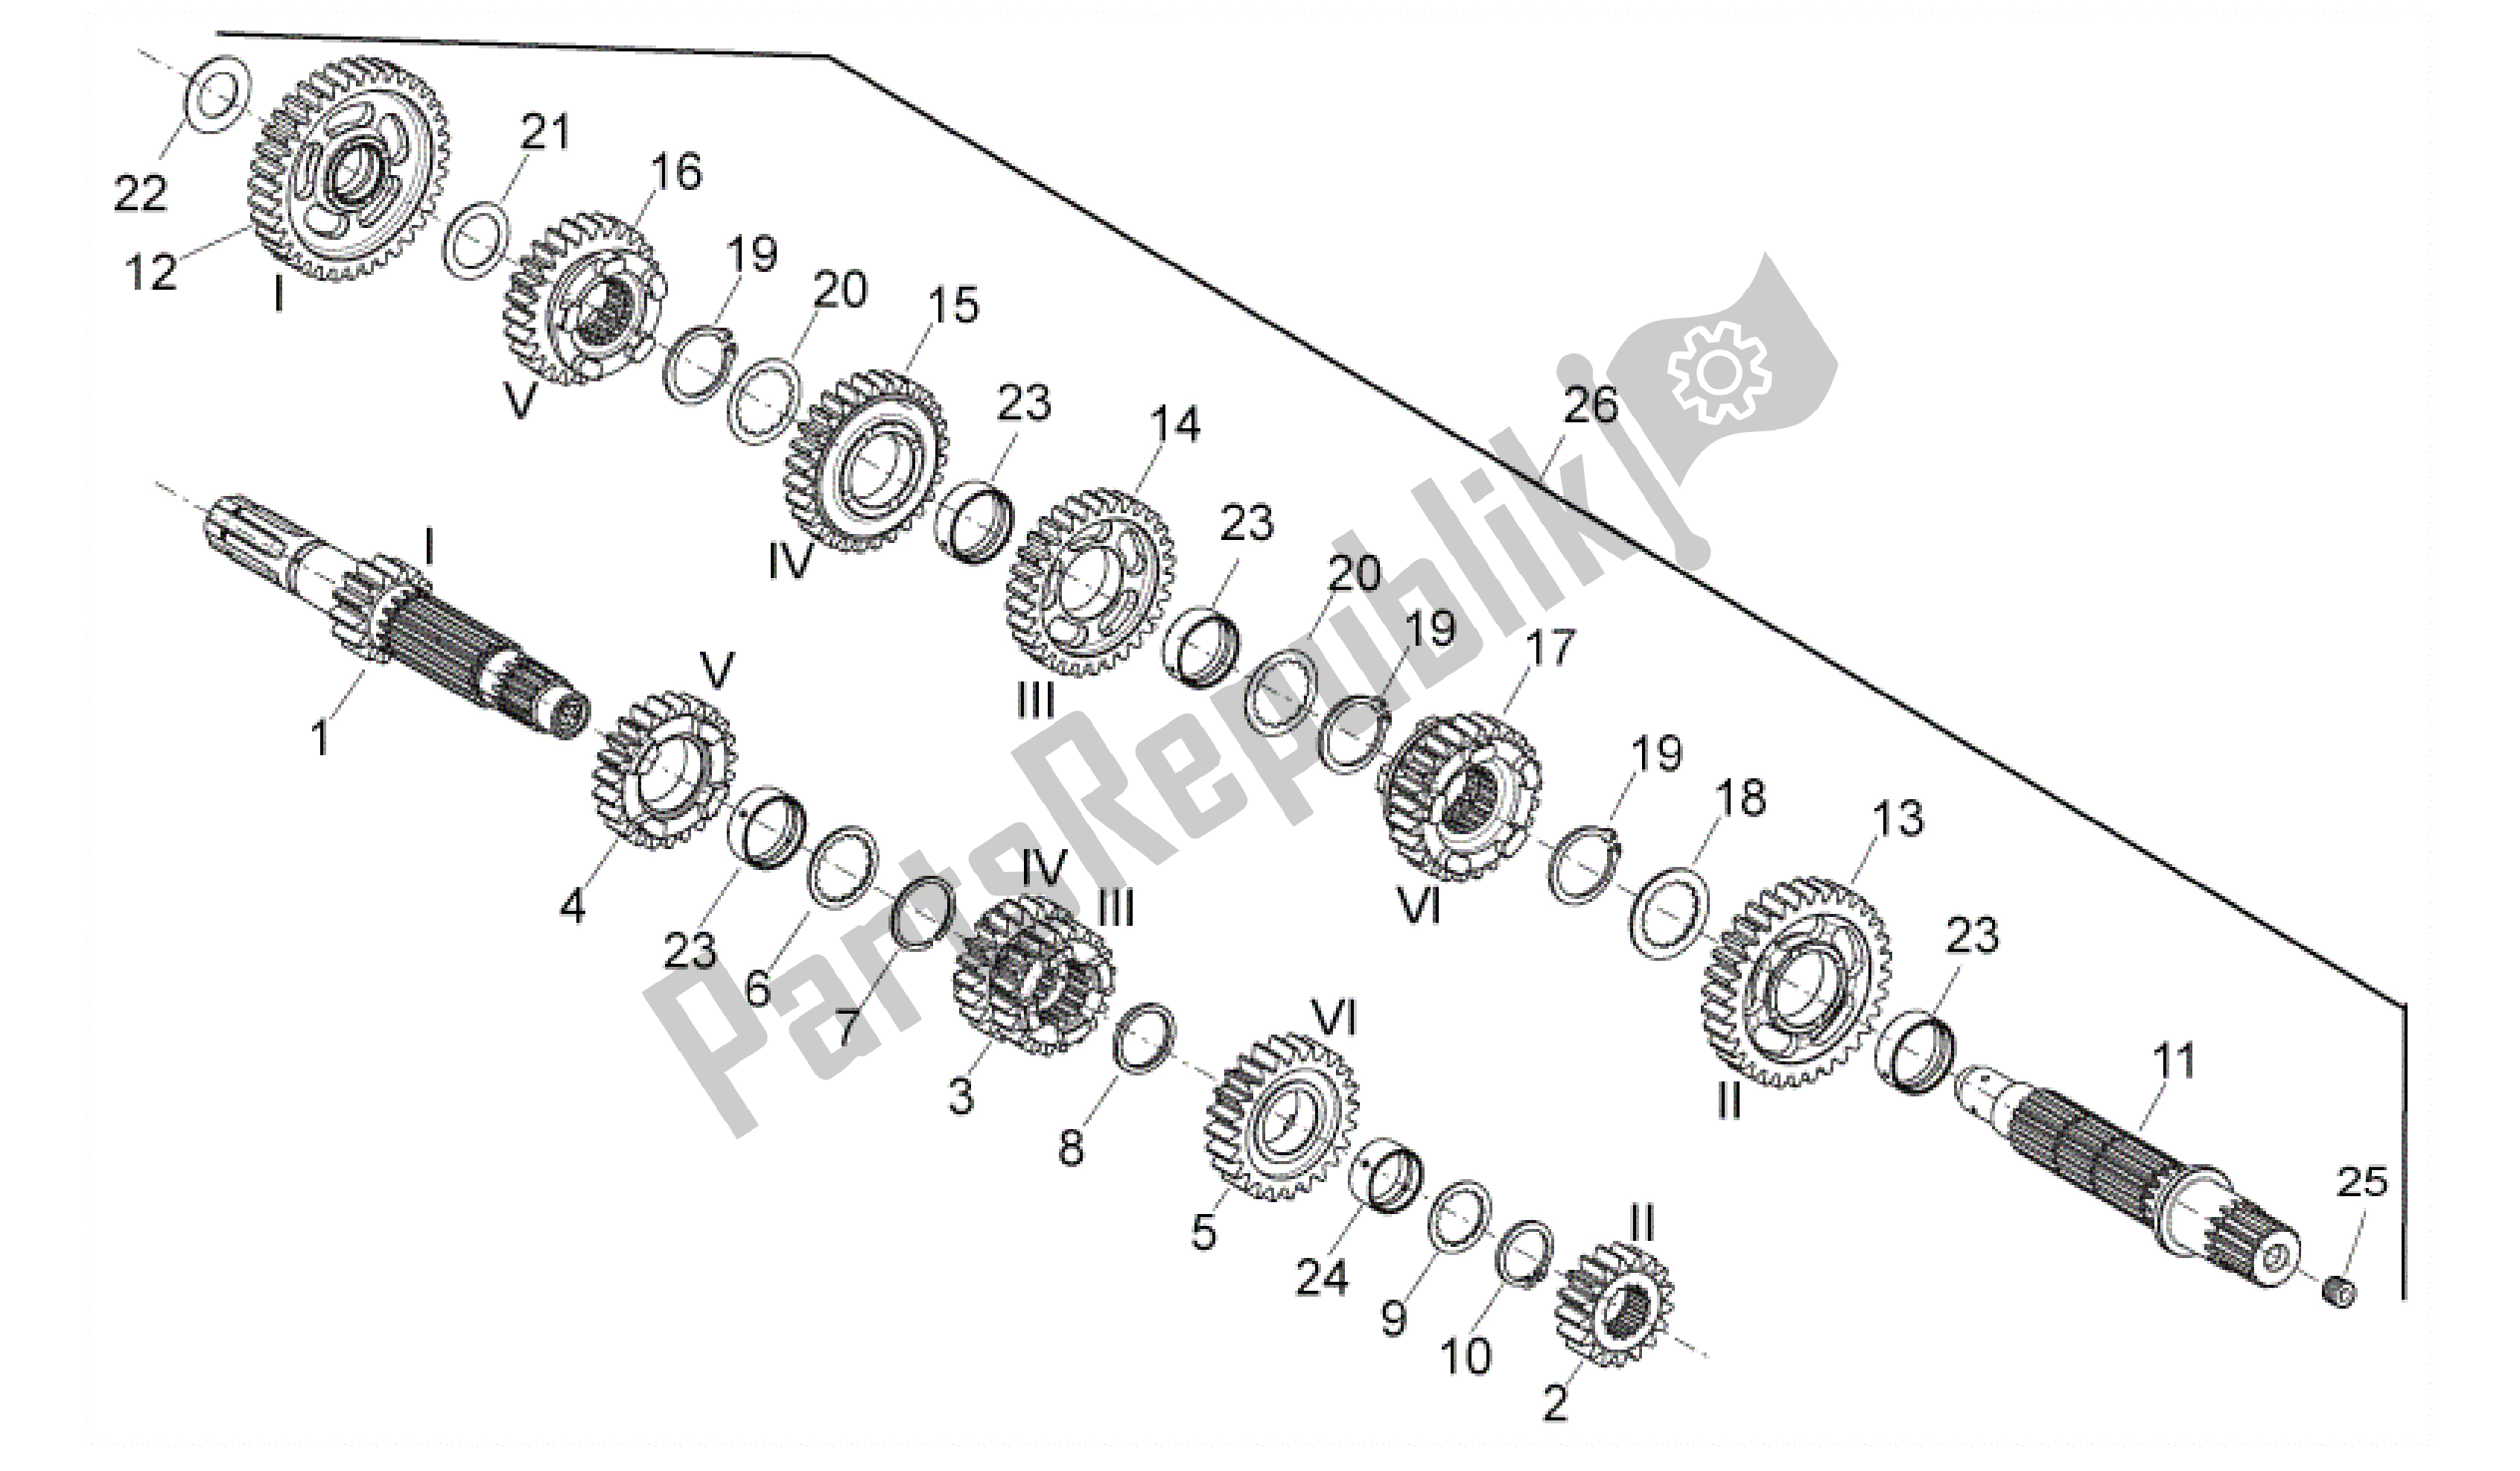 All parts for the Gear Box of the Aprilia Shiver 750 2010 - 2013